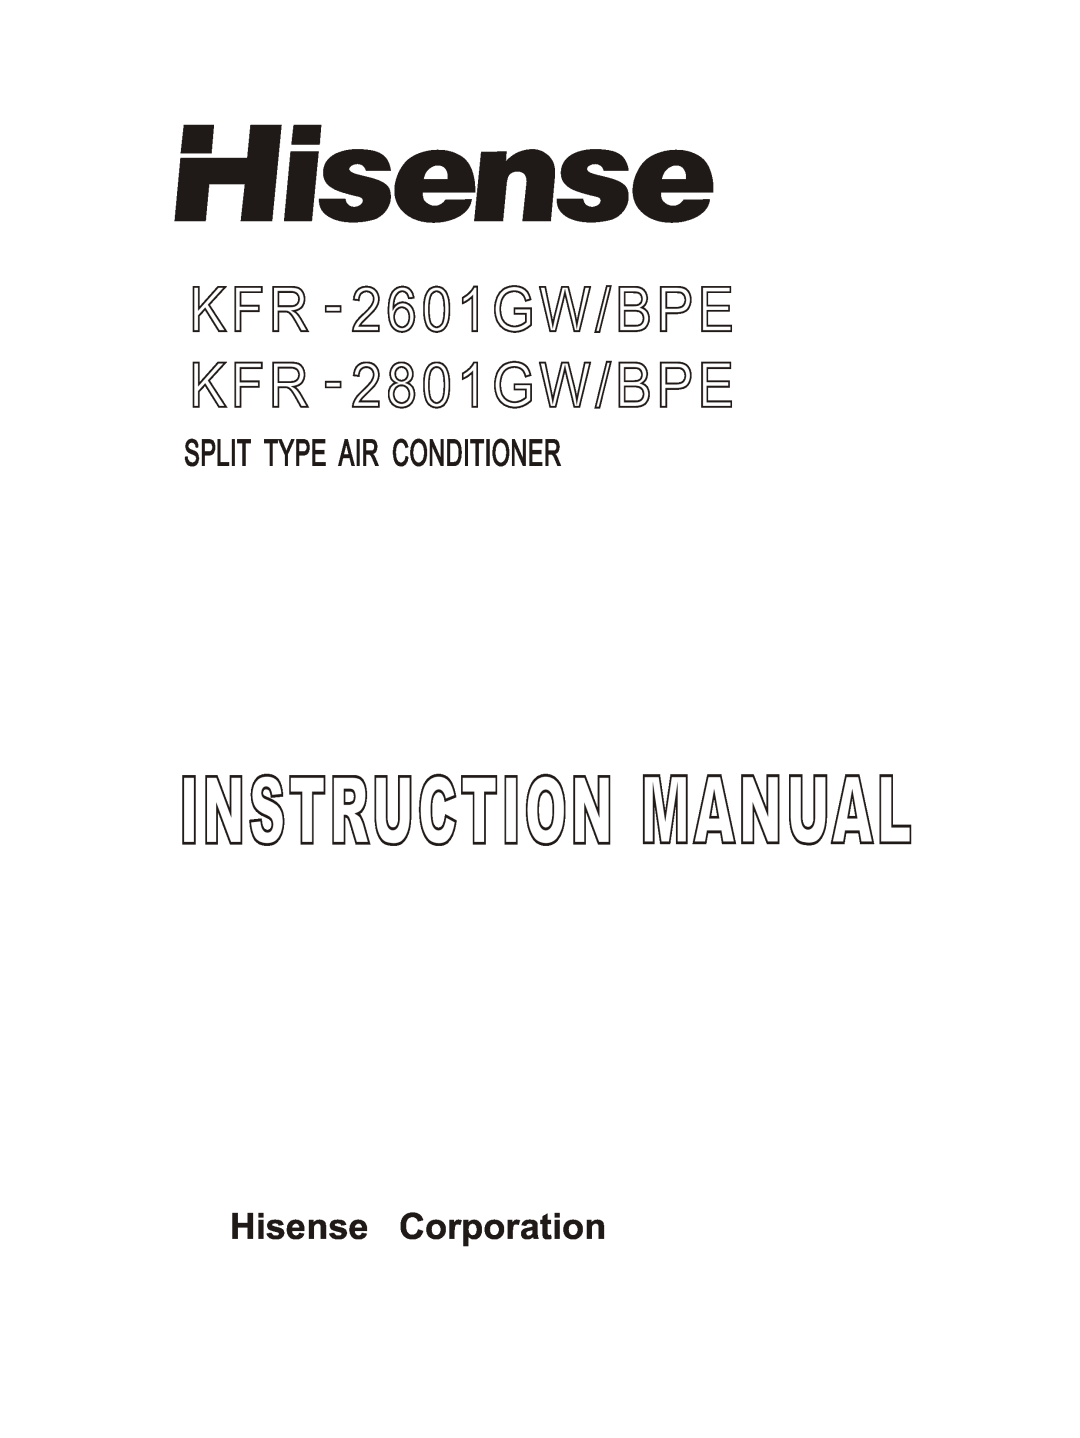 Hisense Group KFR 2601GW/BPE instruction manual KFR - 2601GW/BPE KFR - 2801GW/BPE, Split Type Air Conditioner 